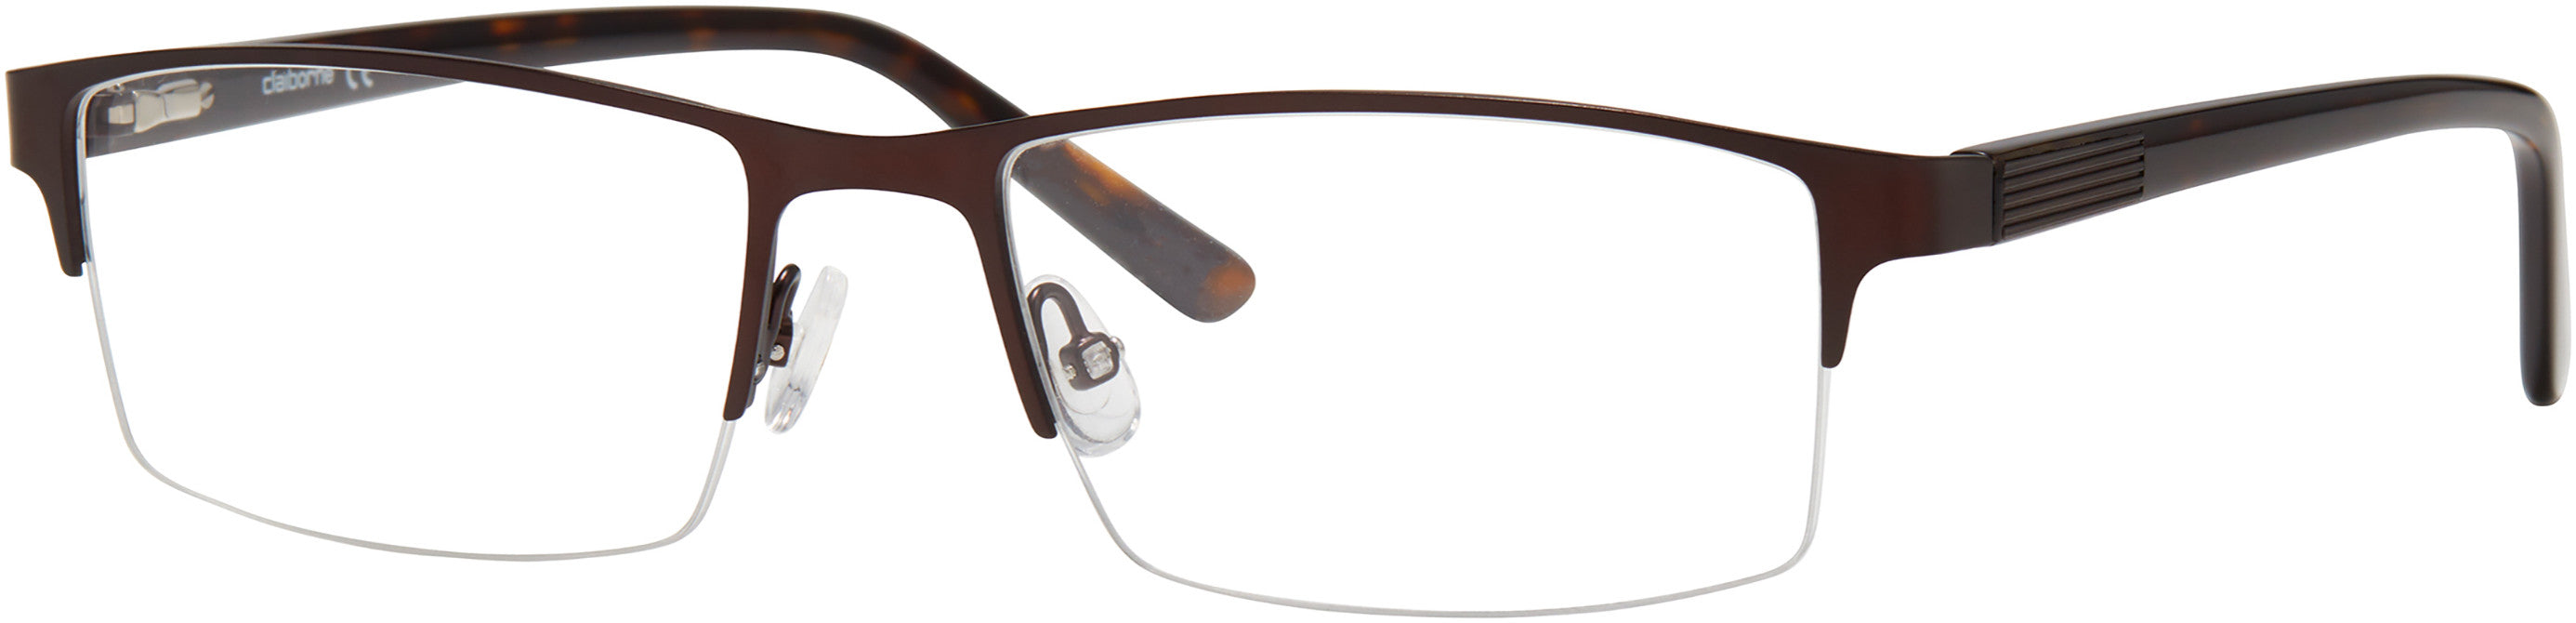  Claiborne 254 Rectangular Eyeglasses 0R0Z-0R0Z  Dark Brown (00 Demo Lens)